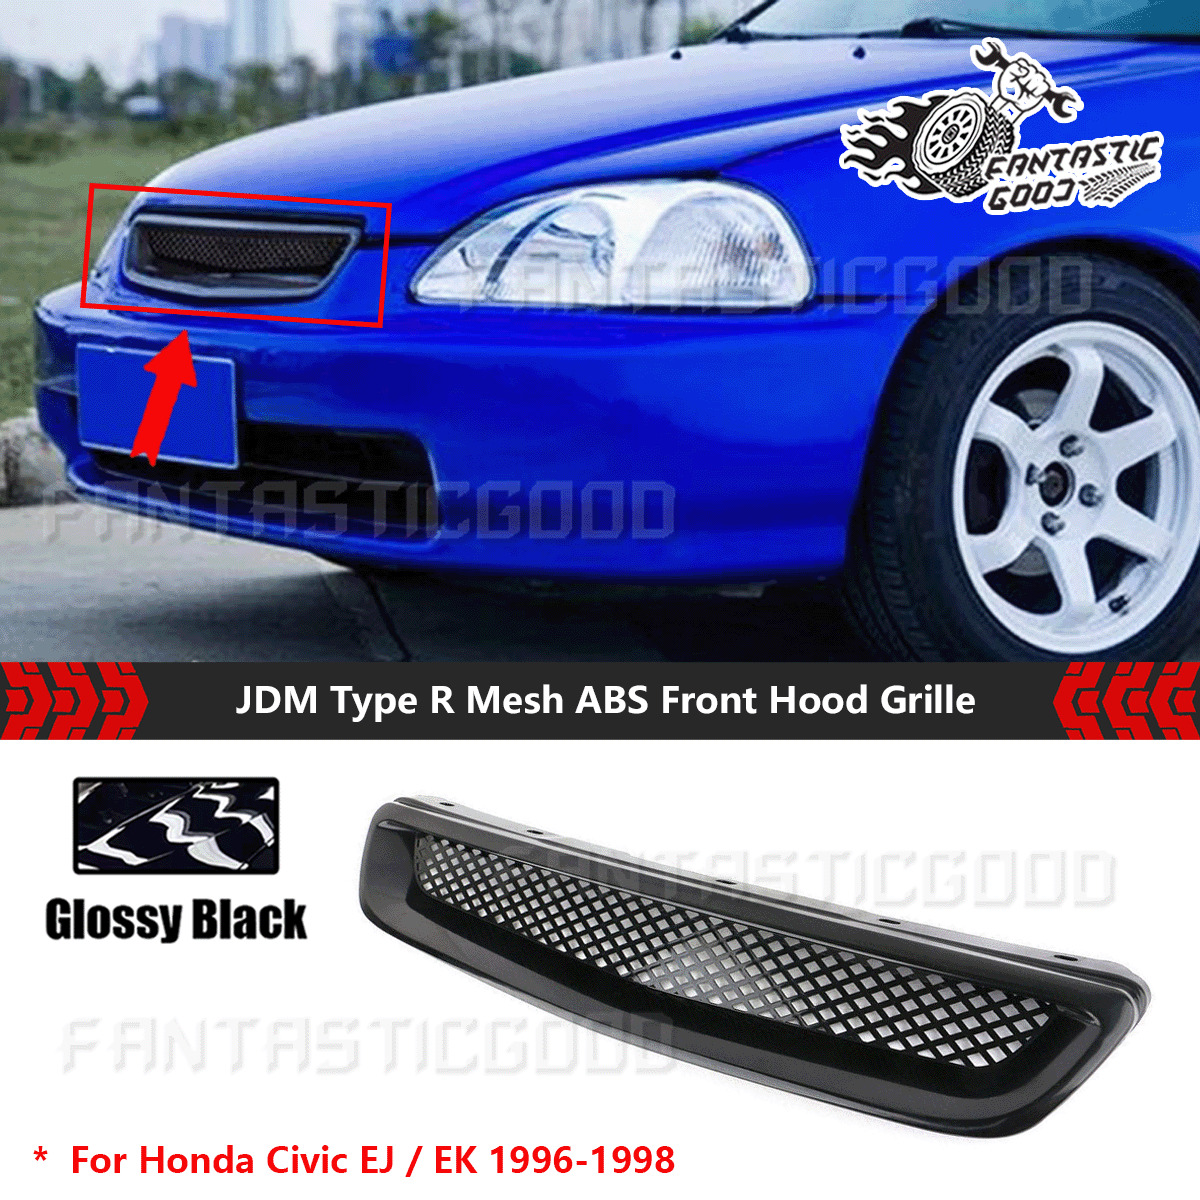 For Honda Civic EK/EJ 1996-98 JDM Type R Glossy Black Front Hood Grille Mesh ABS